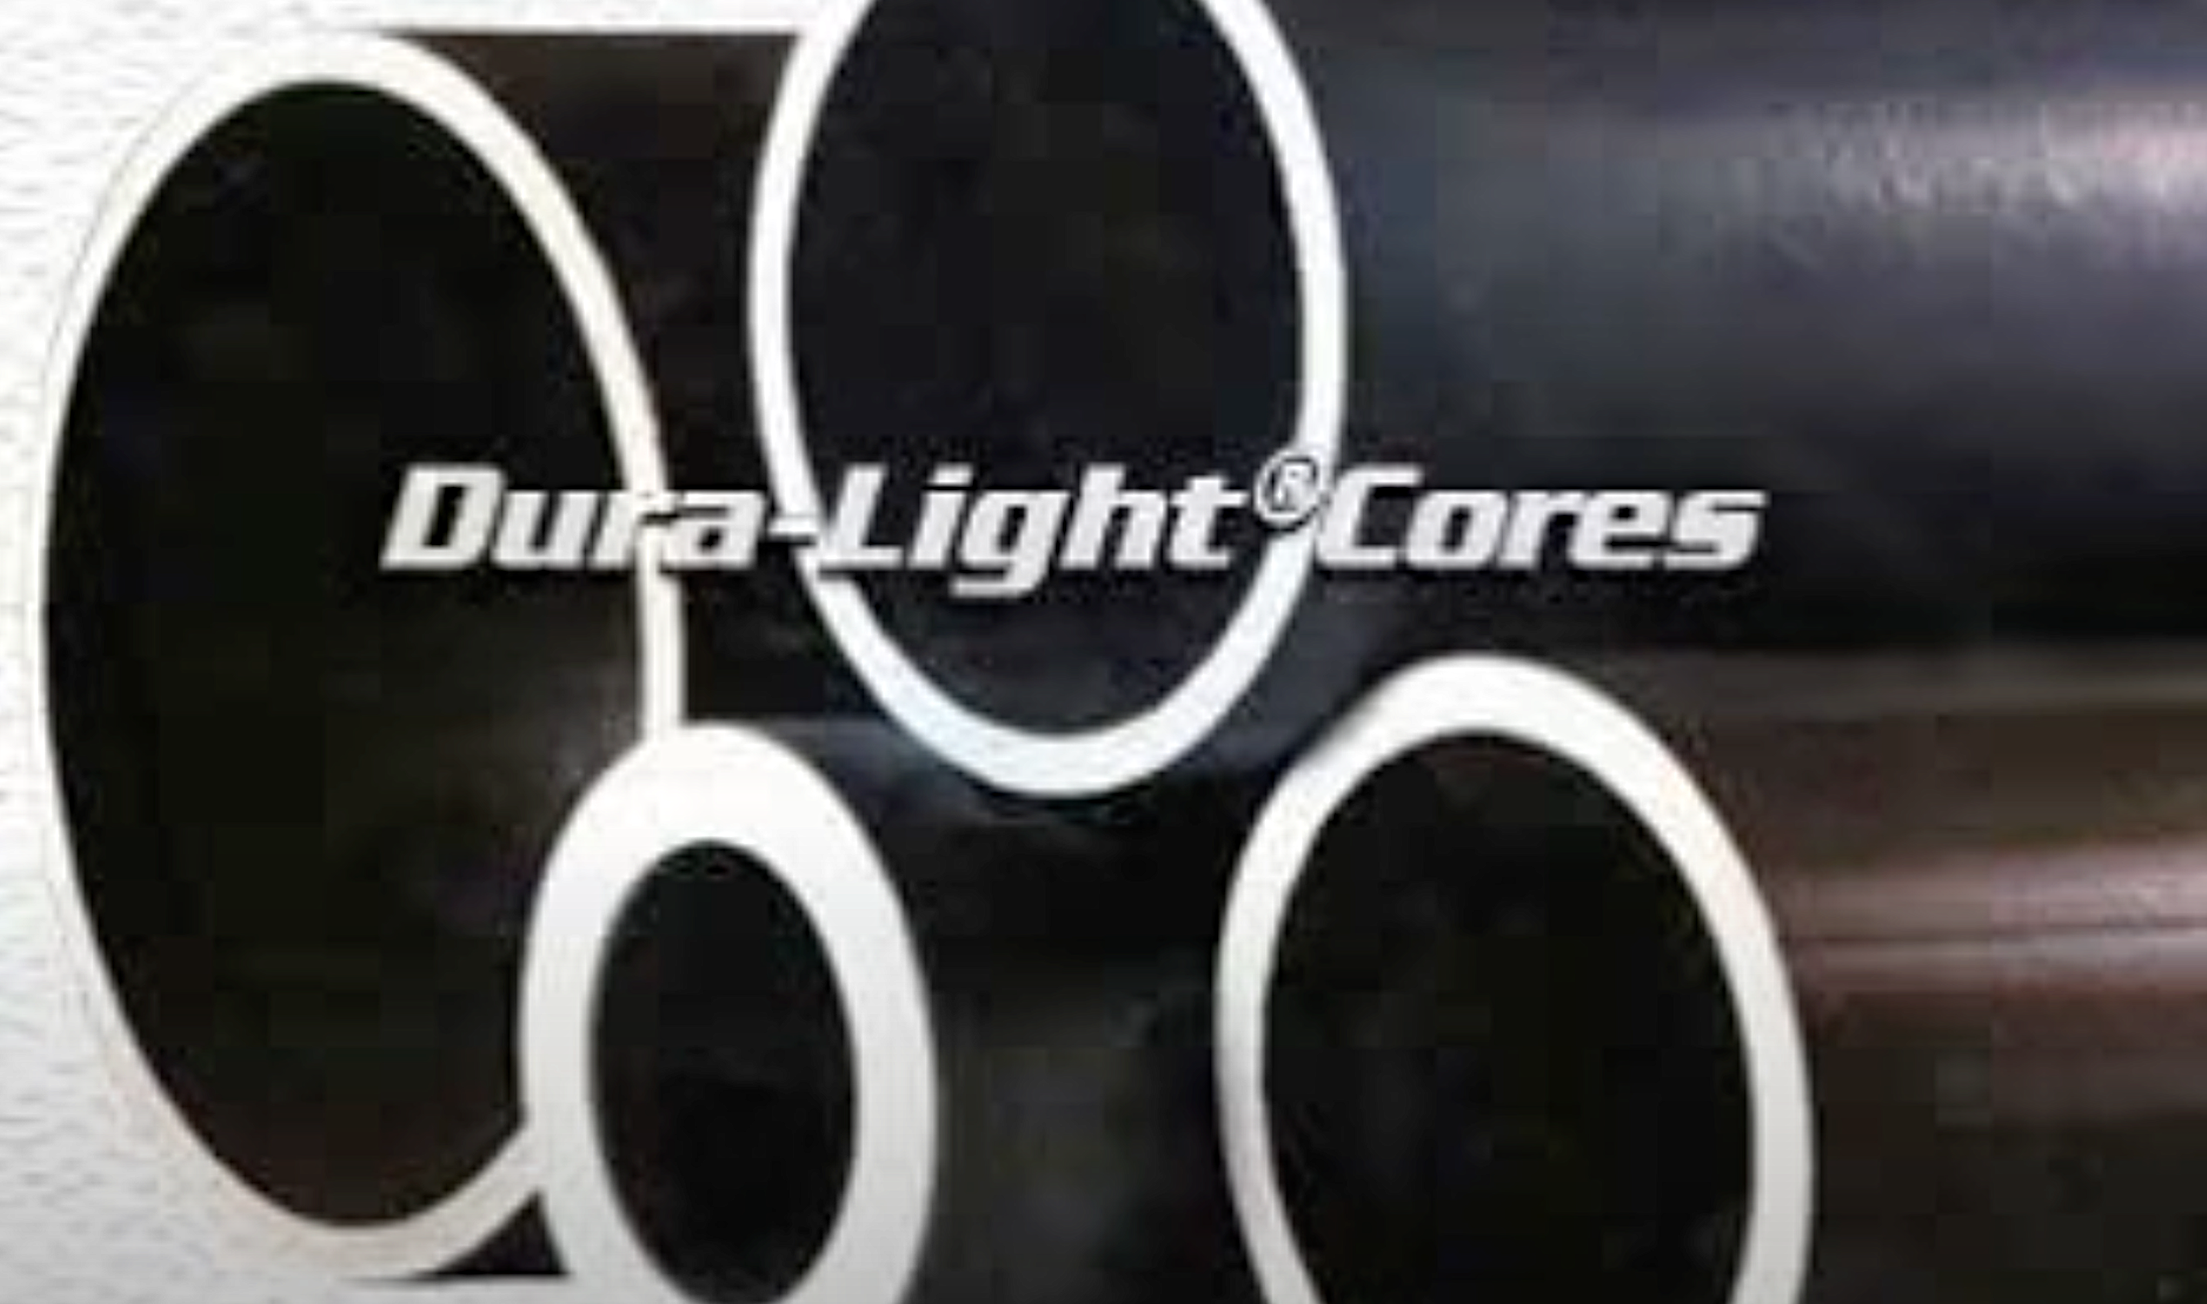 Dura-Light Composite Cores